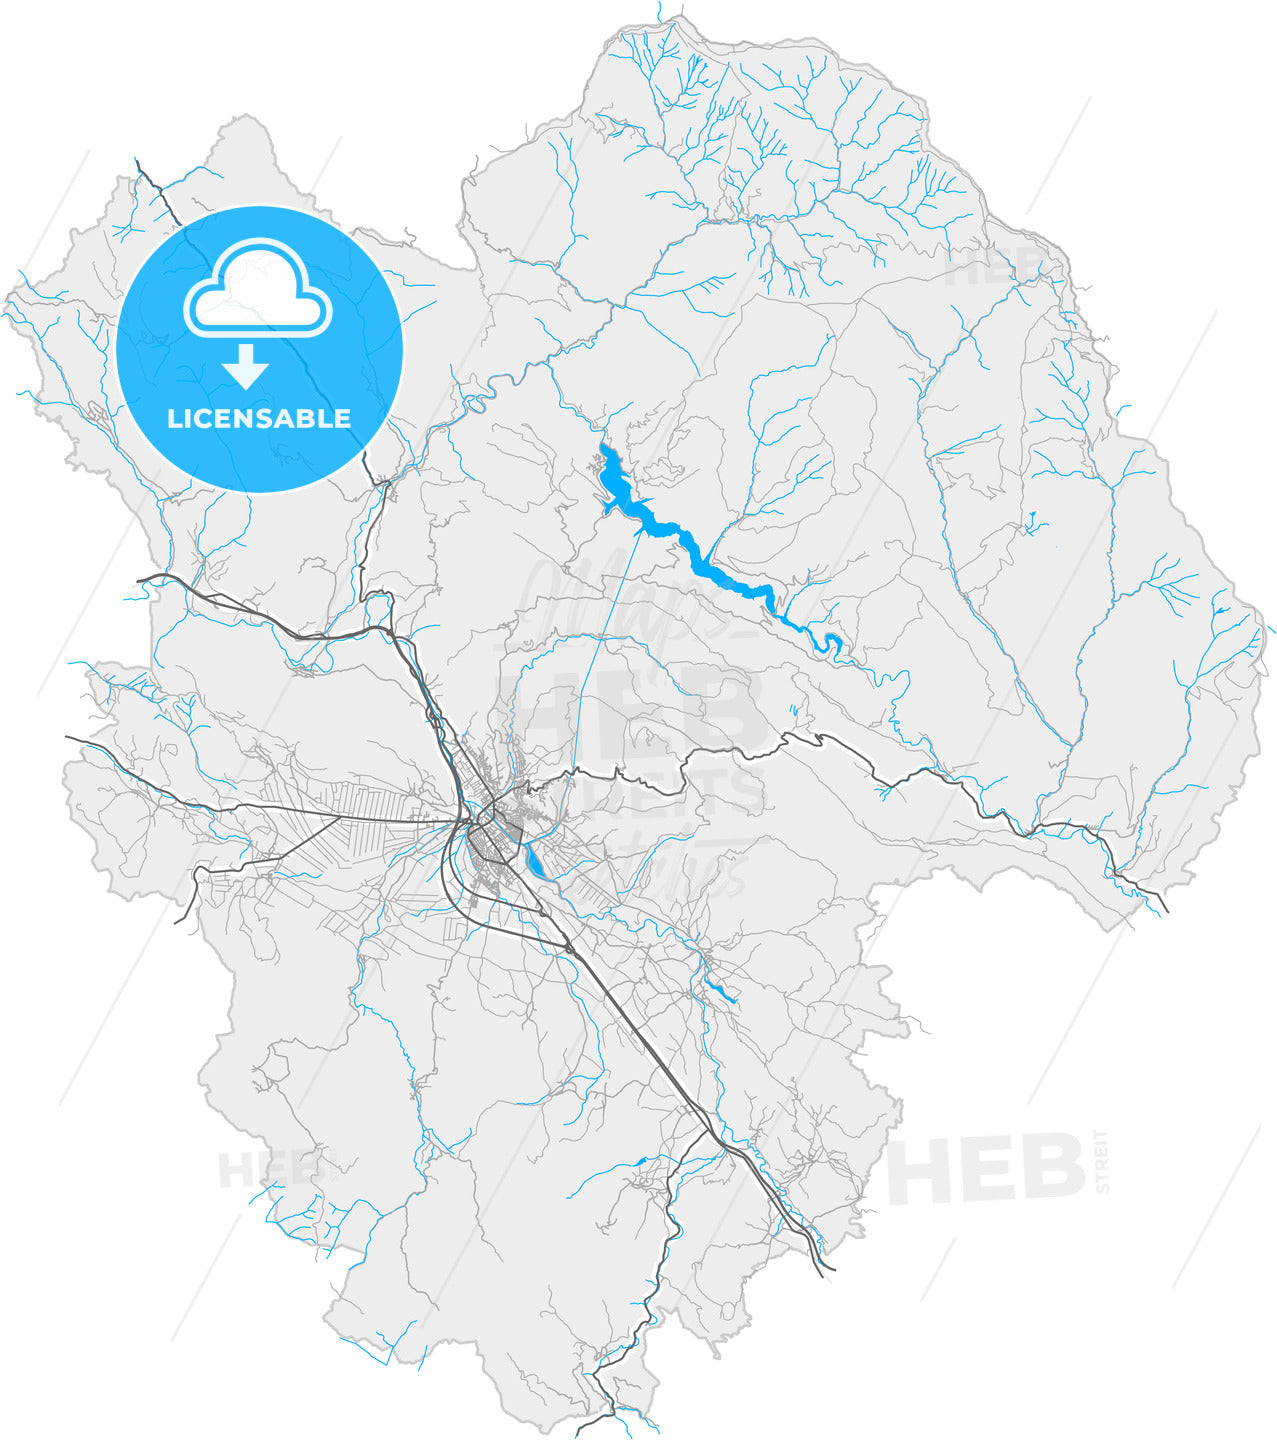 Pirot, Pirot, Serbia, high quality vector map